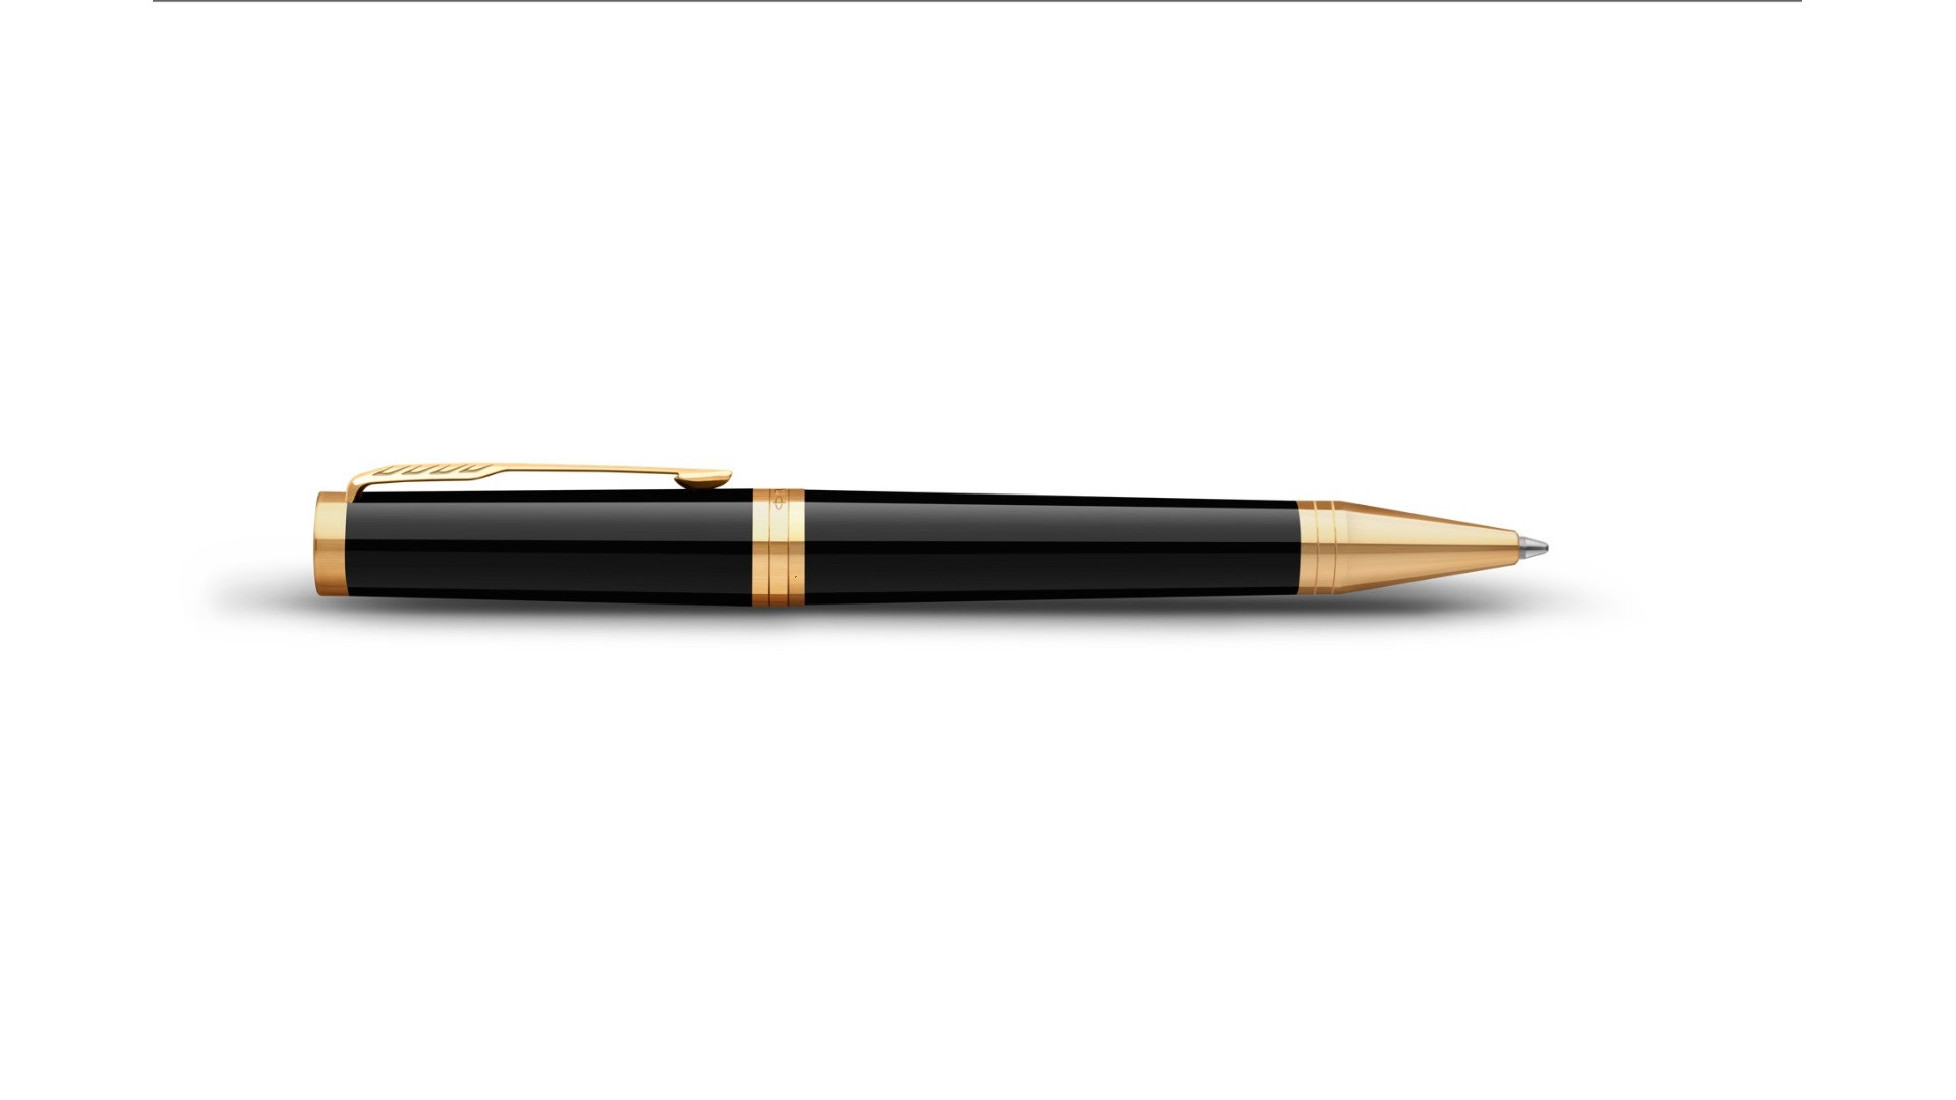 Parker Ingenuity Ballpoint pen Core black GT